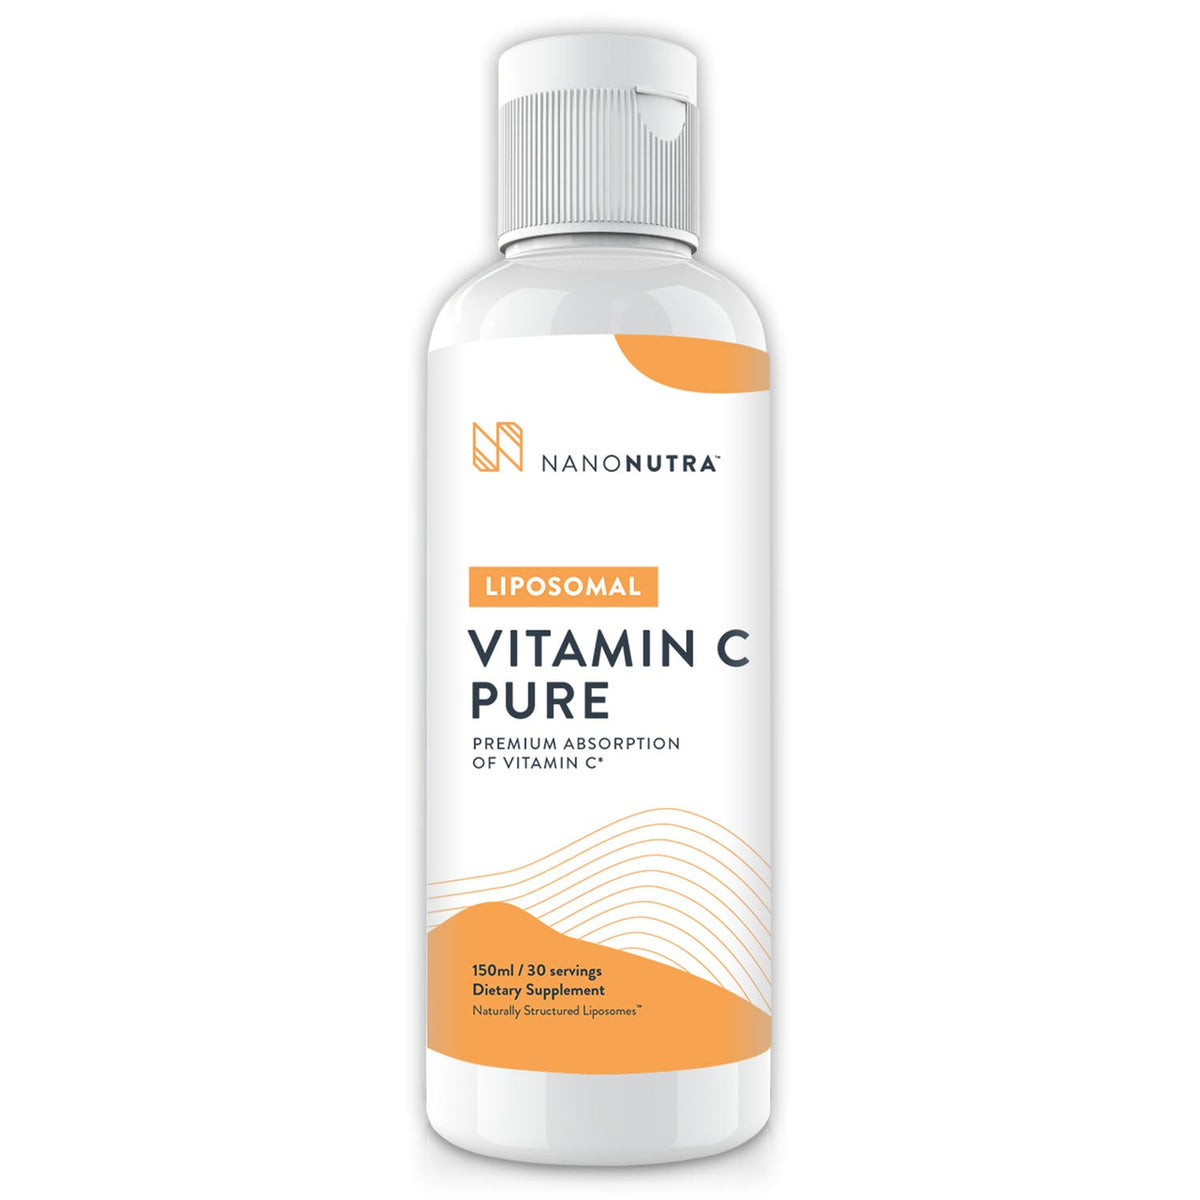 Liposomal Vitamin C PURE by NanoNutra